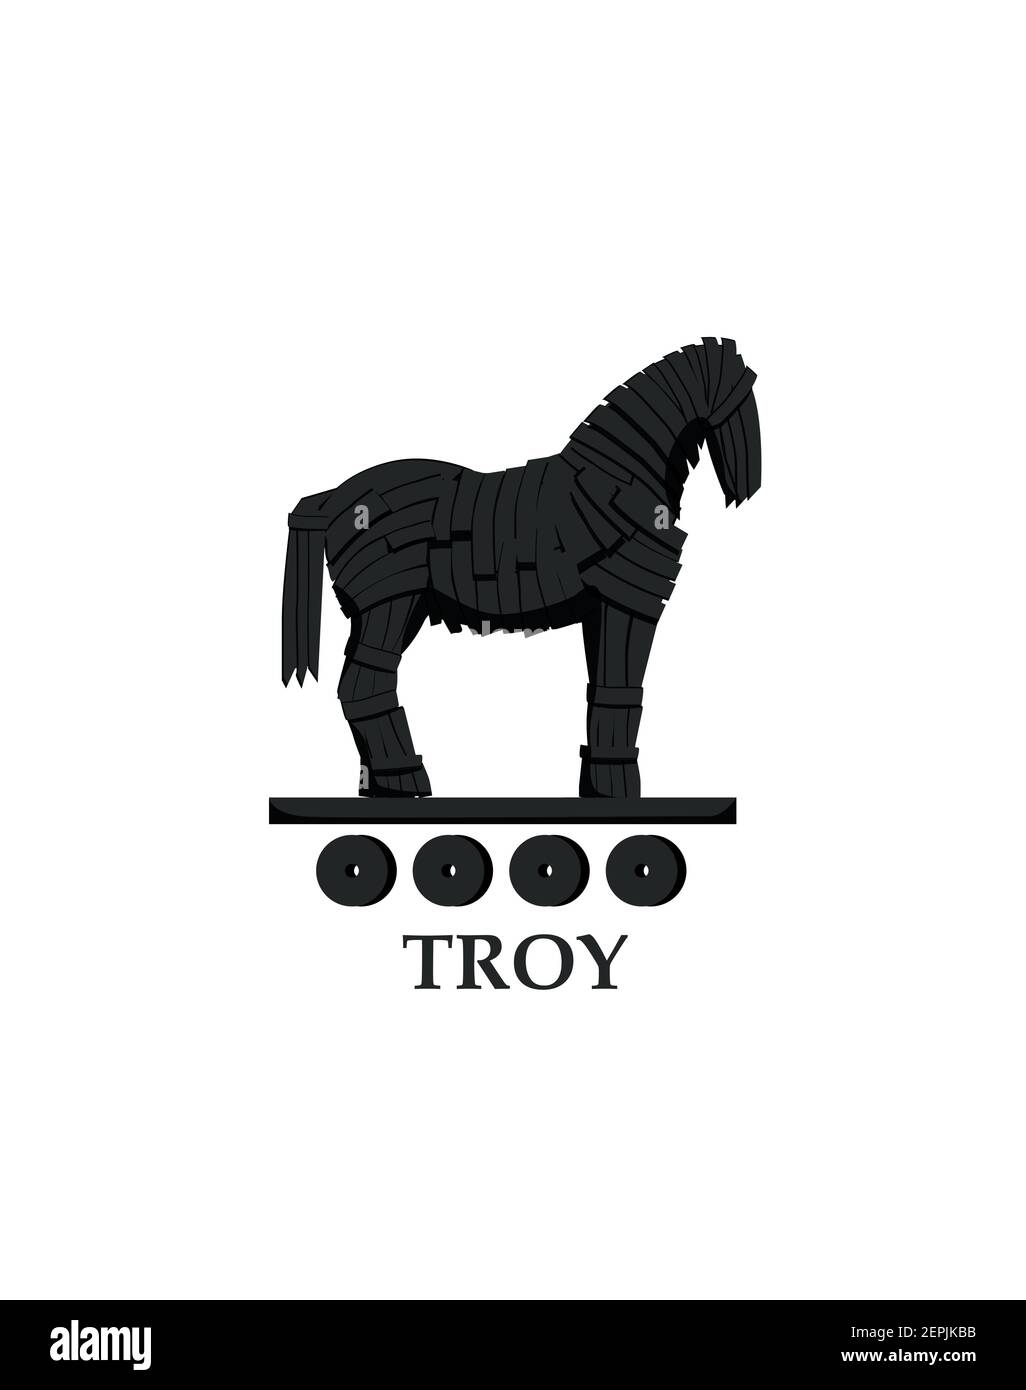 Trojan horse clipart. Dark wooden mythology animal on massive platform wheels symbol deception. Stock Vector